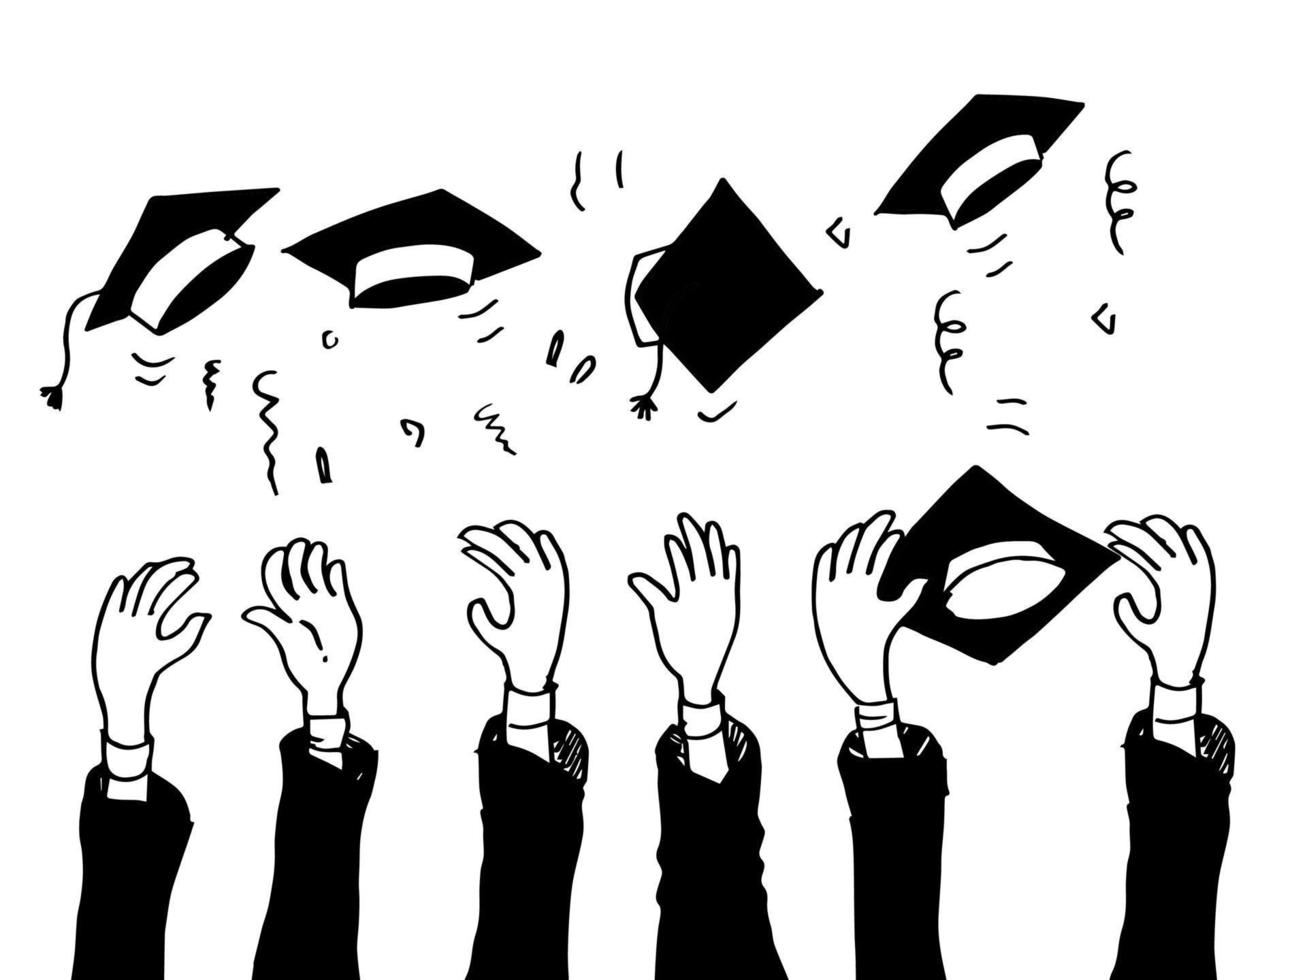 doodle hands up, Hands clapping. applause gestures. succes, congratulation graduation. vector illustration